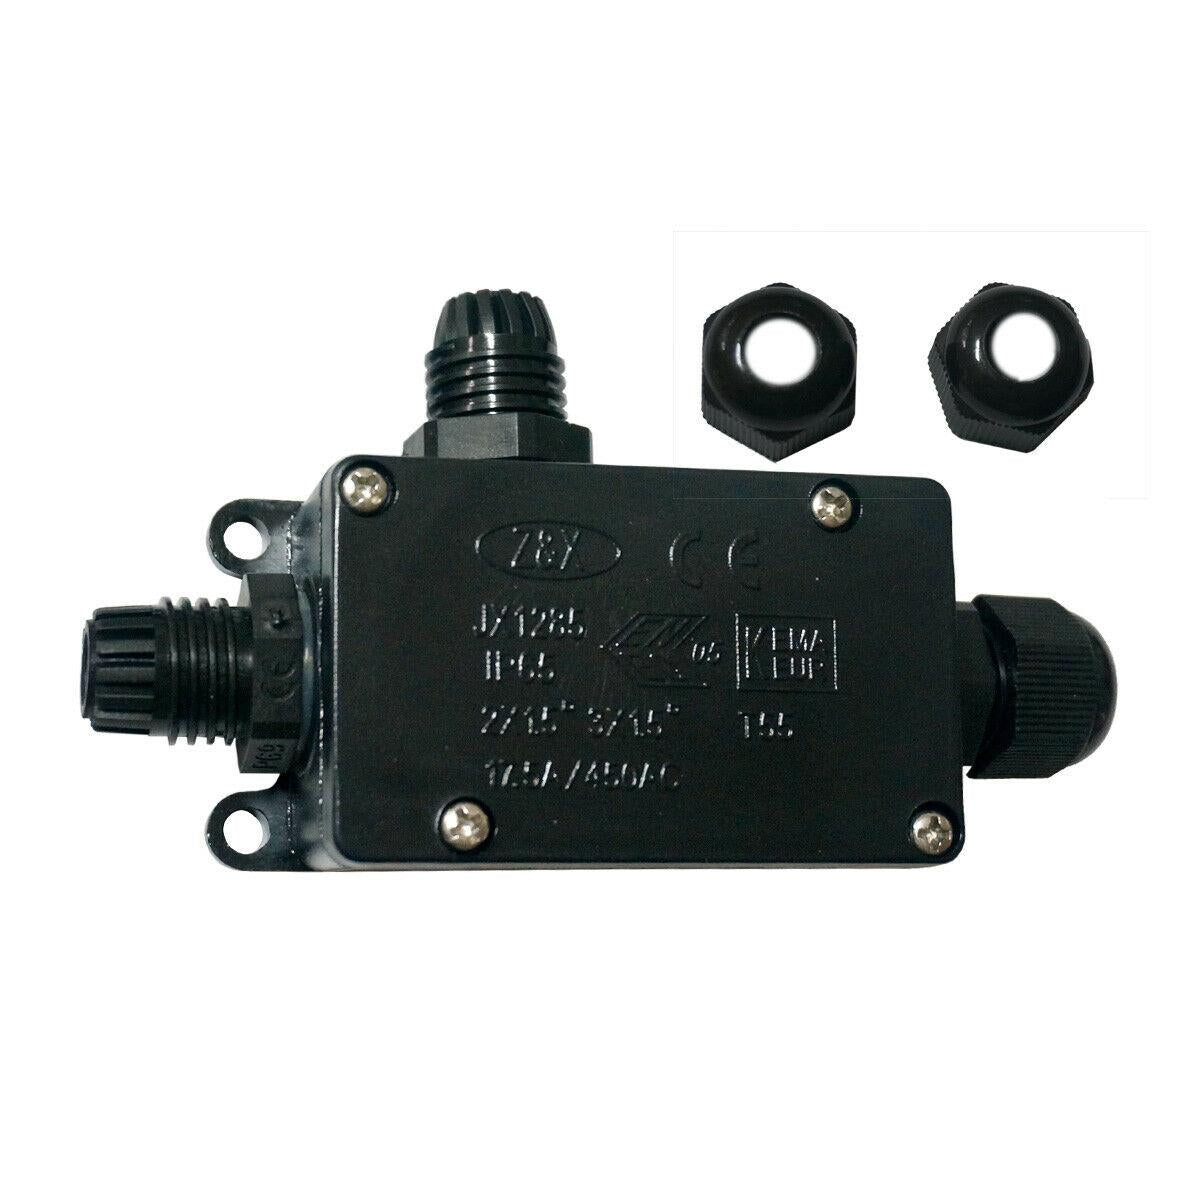 2/3 Way IP65 Junction Box Waterproof Electrical Connector